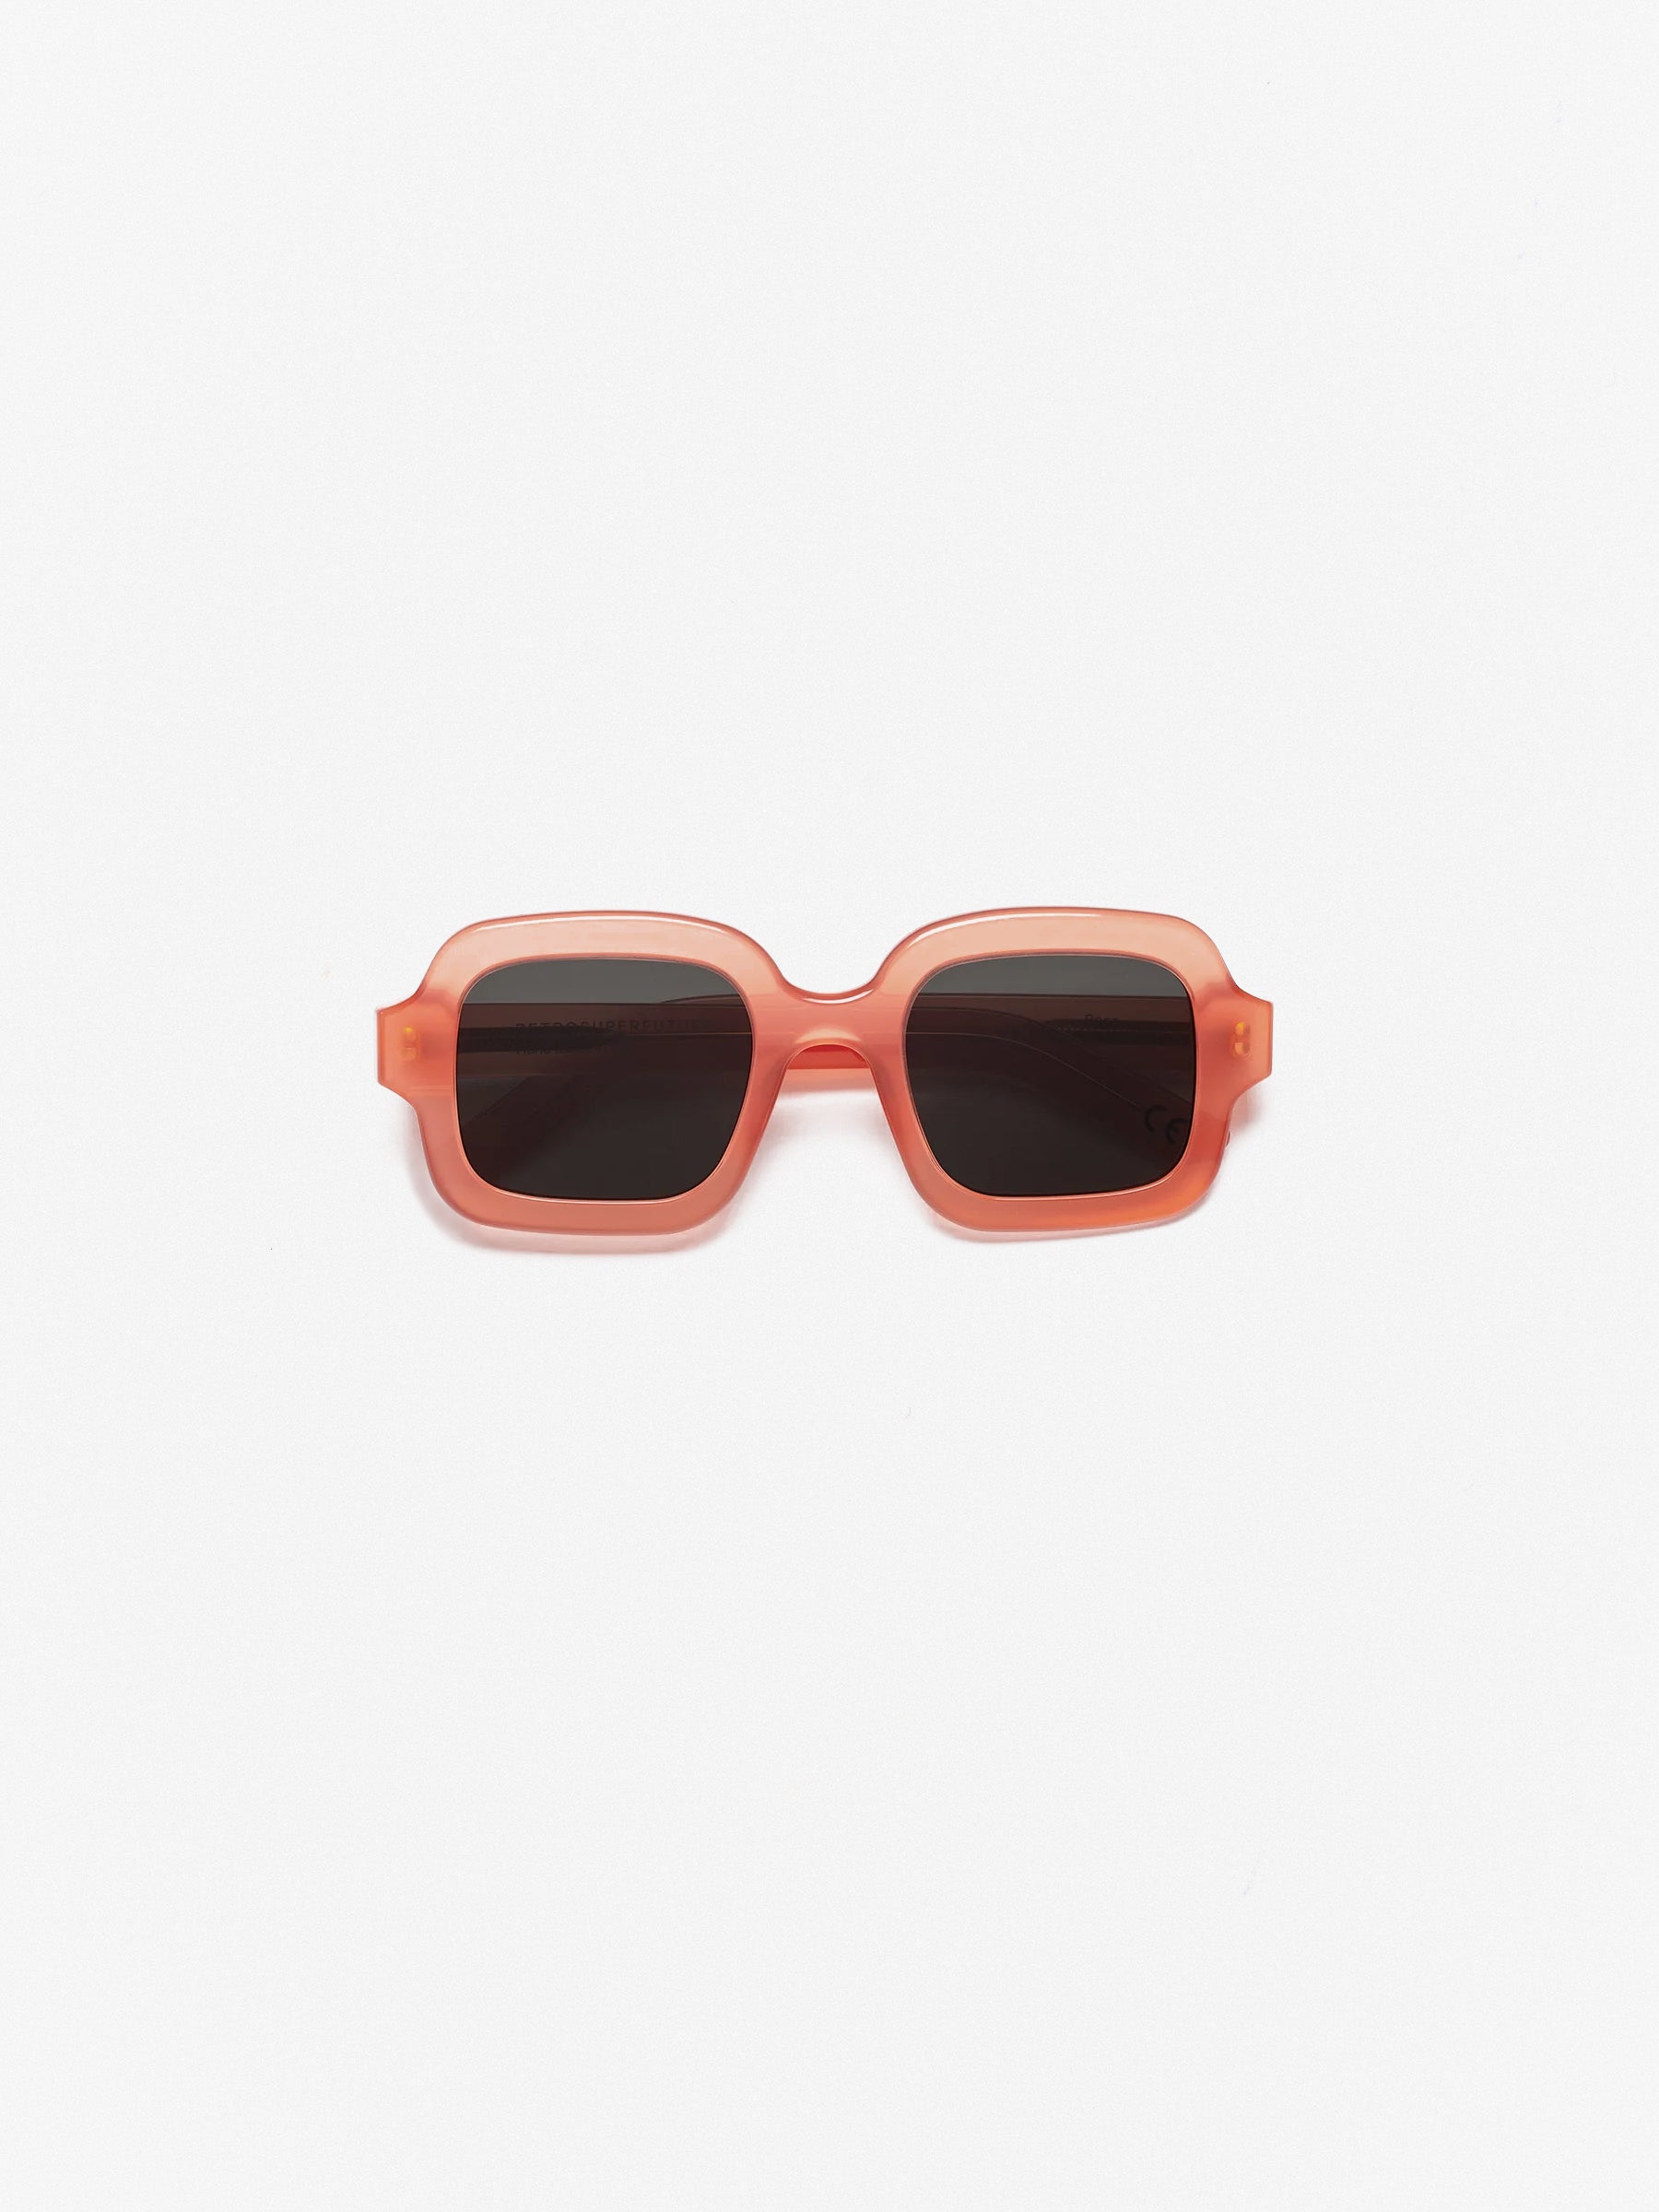 Benz Rusty Sunglasses Orange